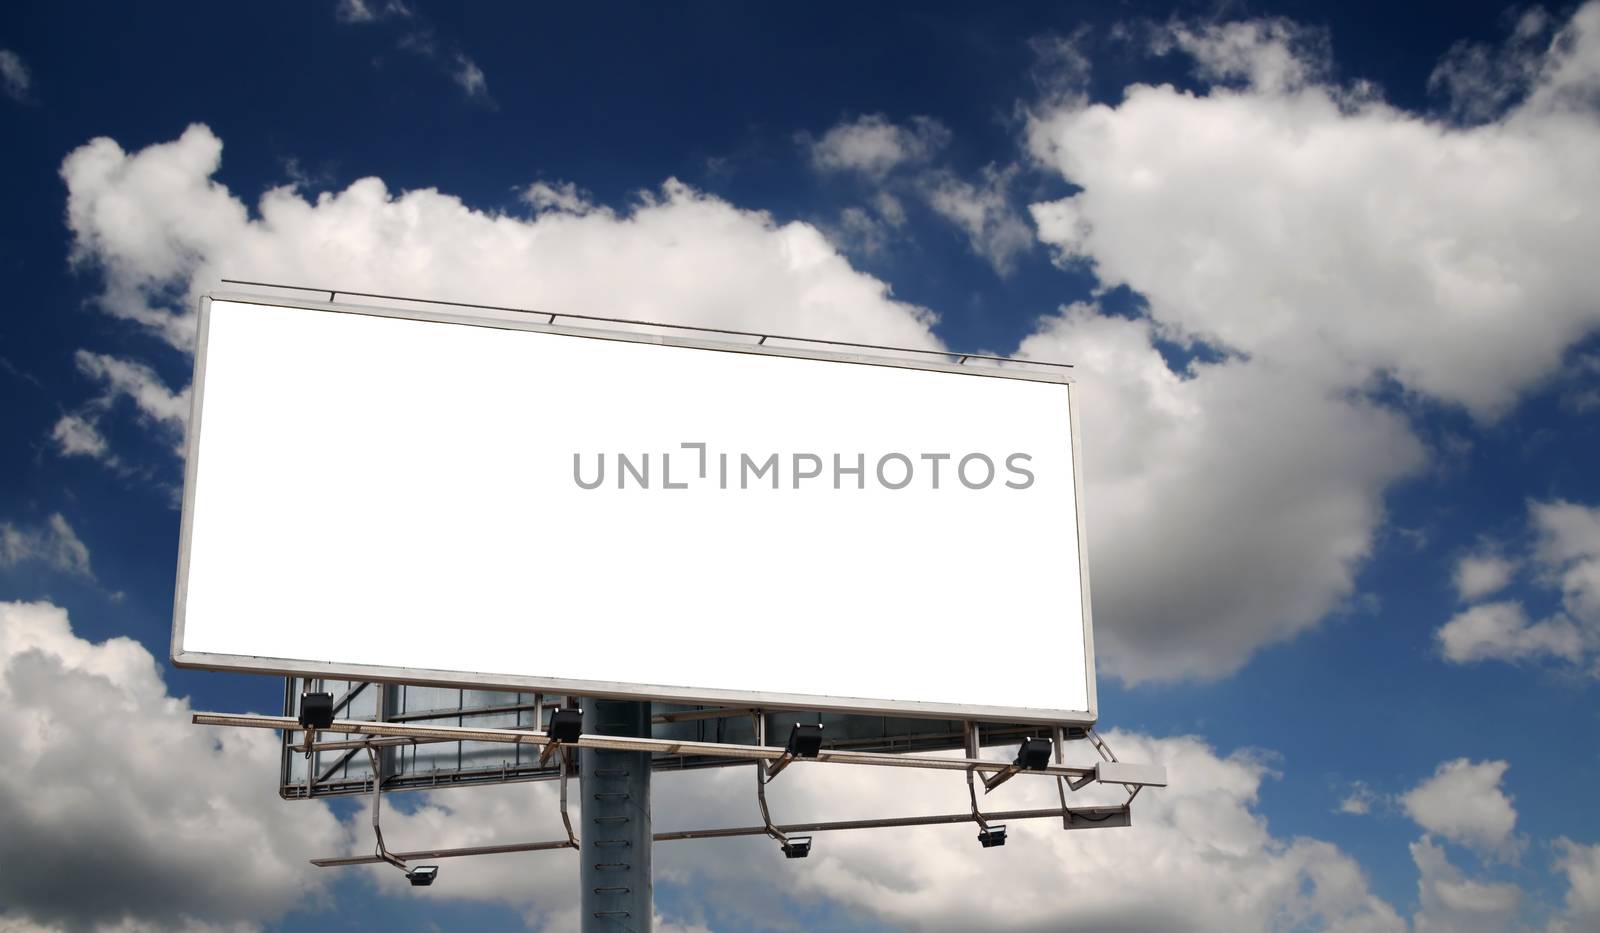 Blank Billboard Screen in front of beautiful cloudy sky